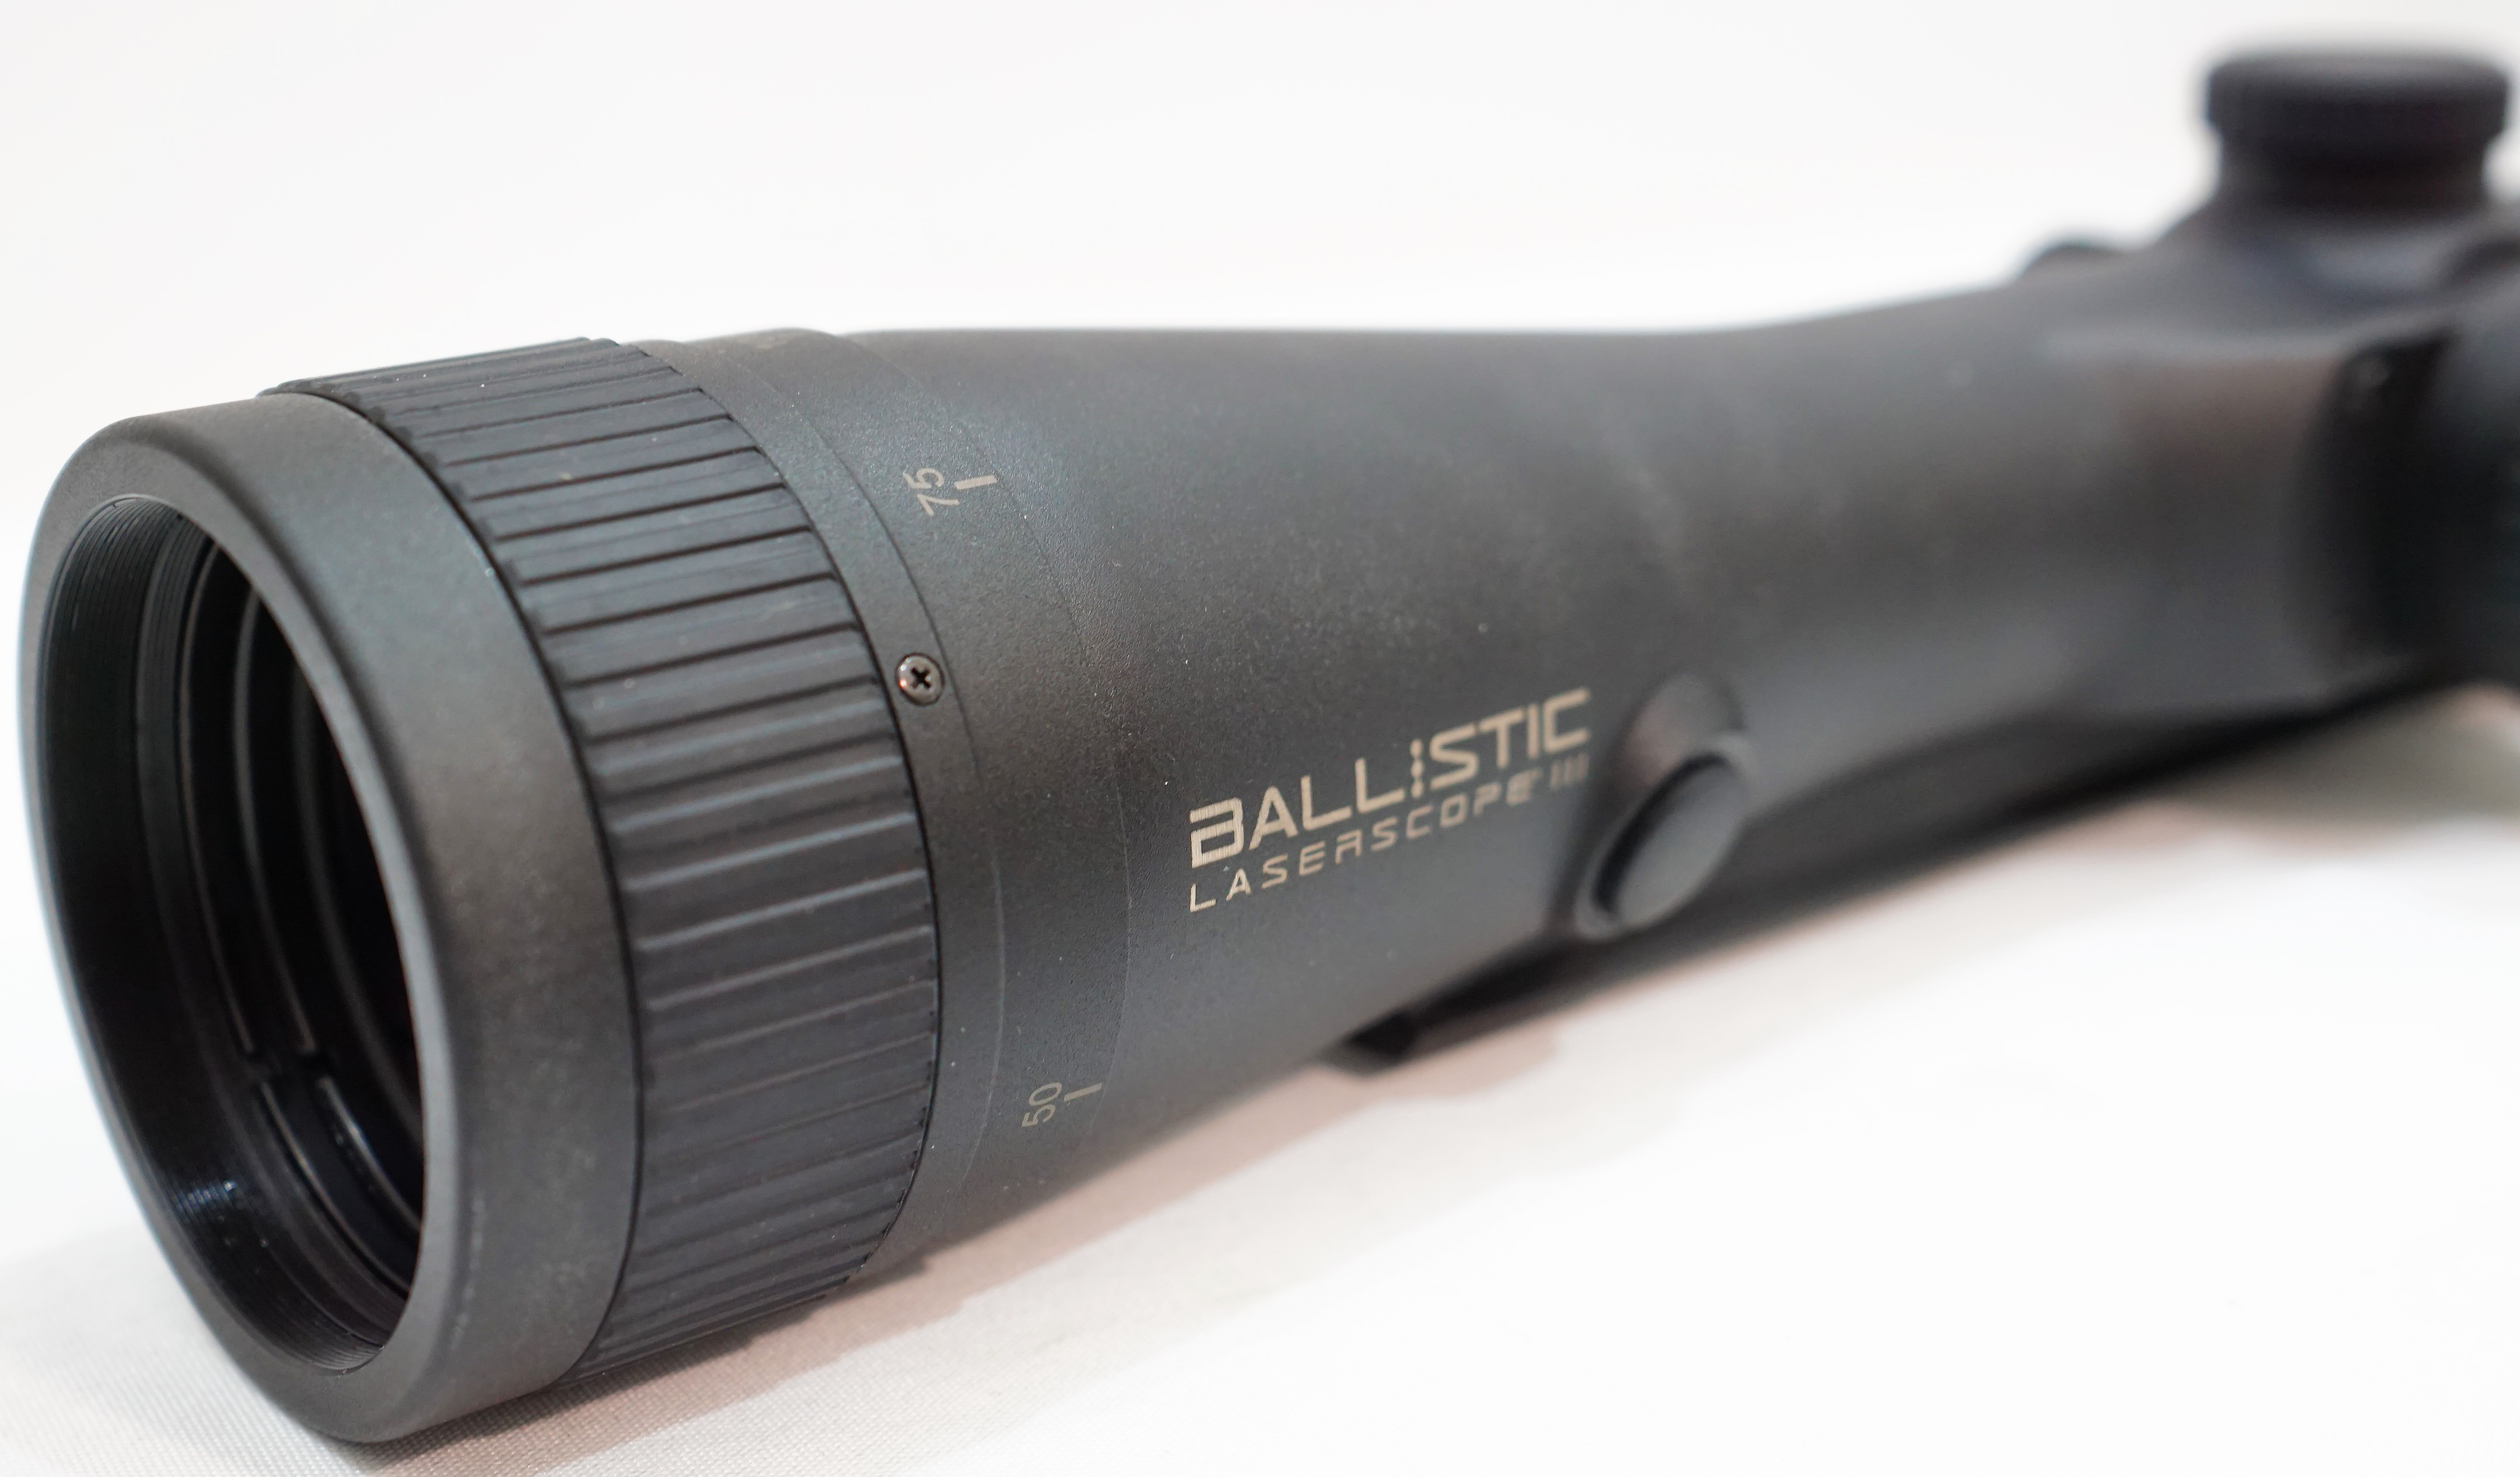 Burris Ballistic laser scope III 4-16X50